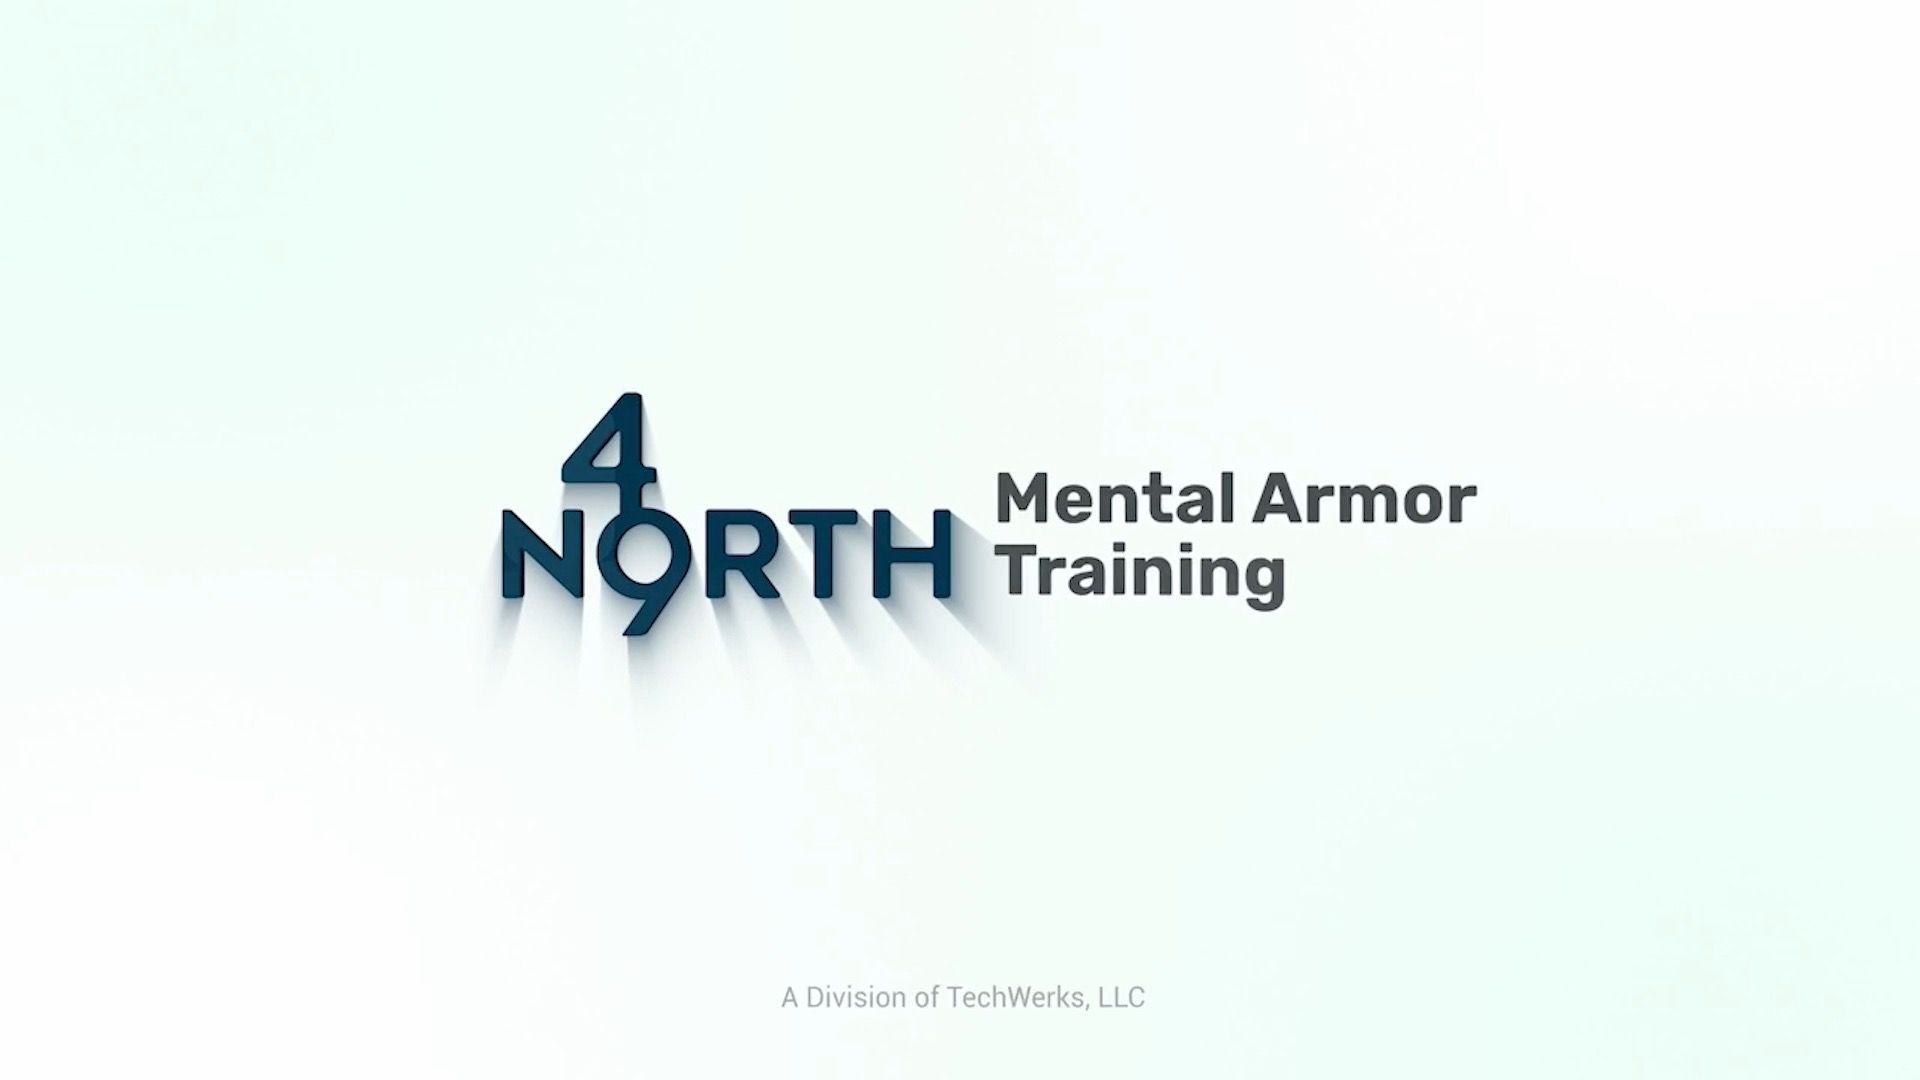 49N™ Mental Armor for Public Safety